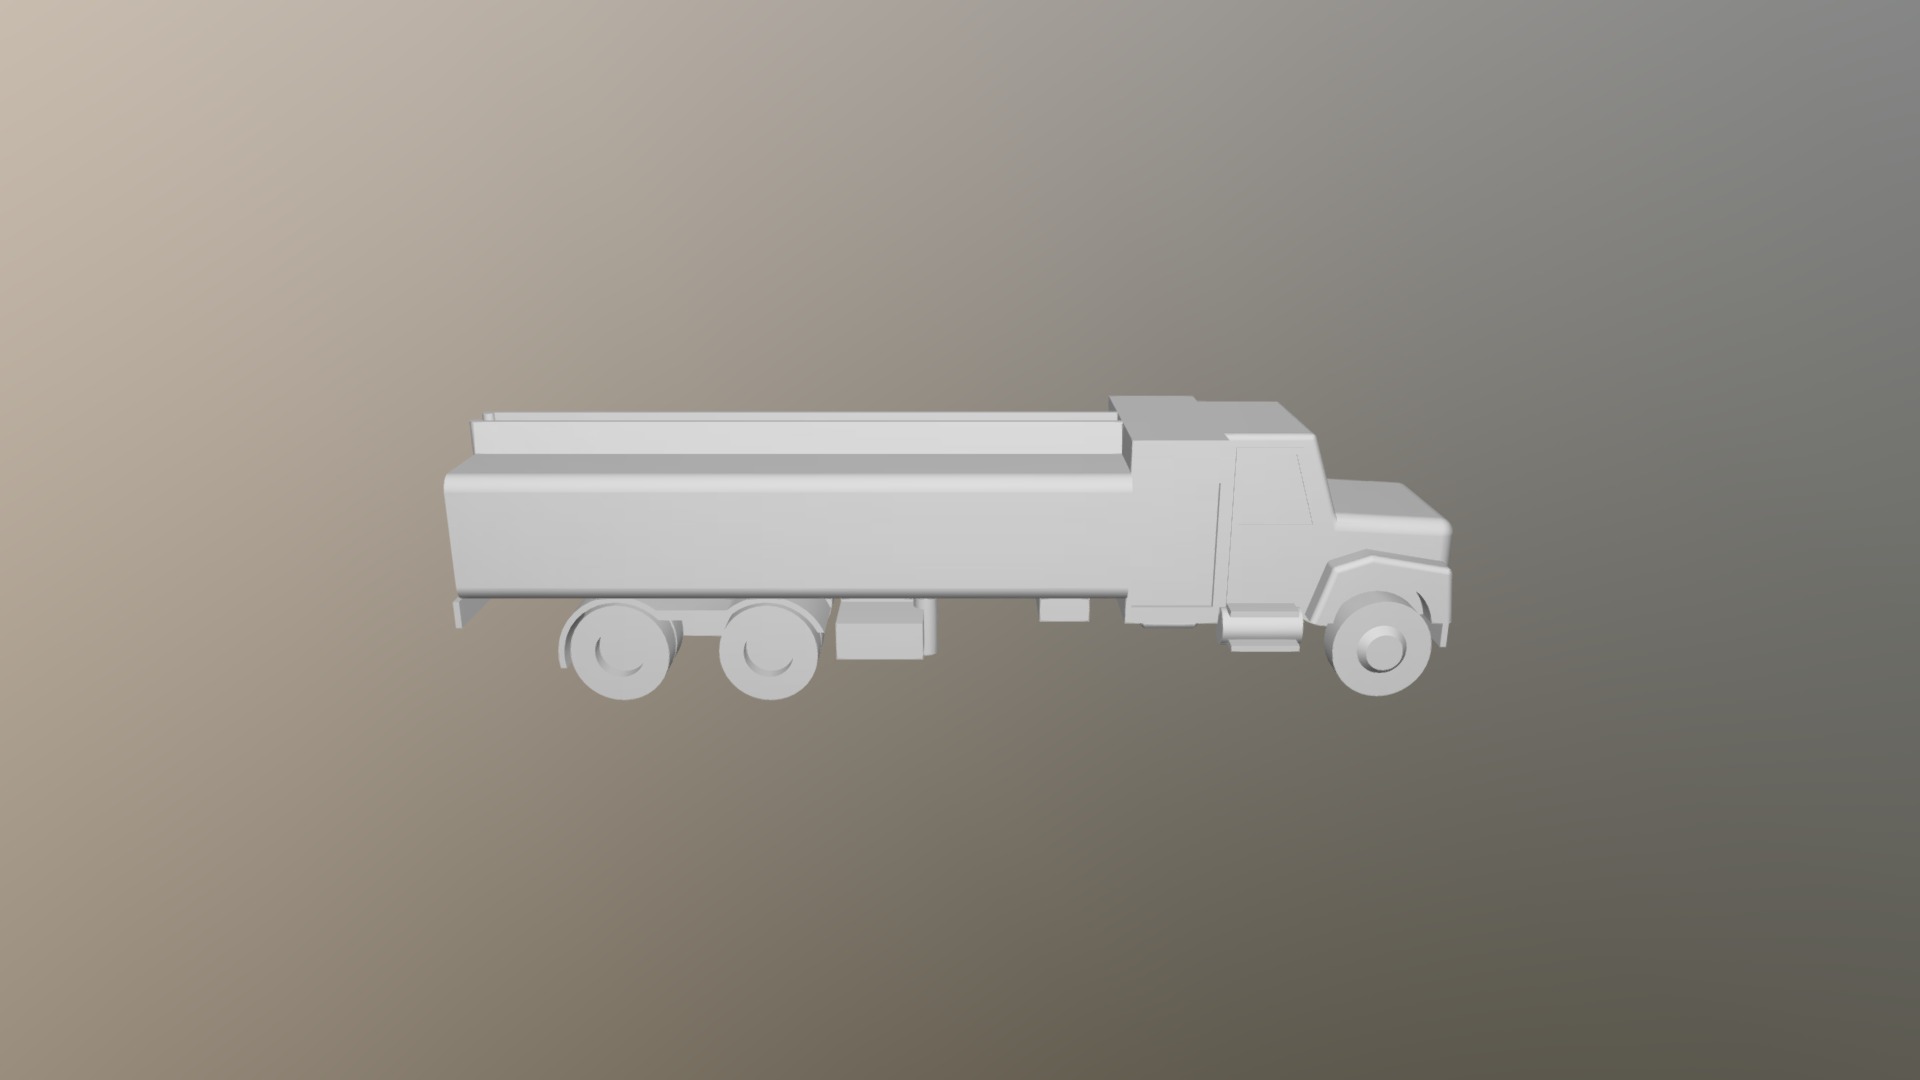 r 11 fuel truck model